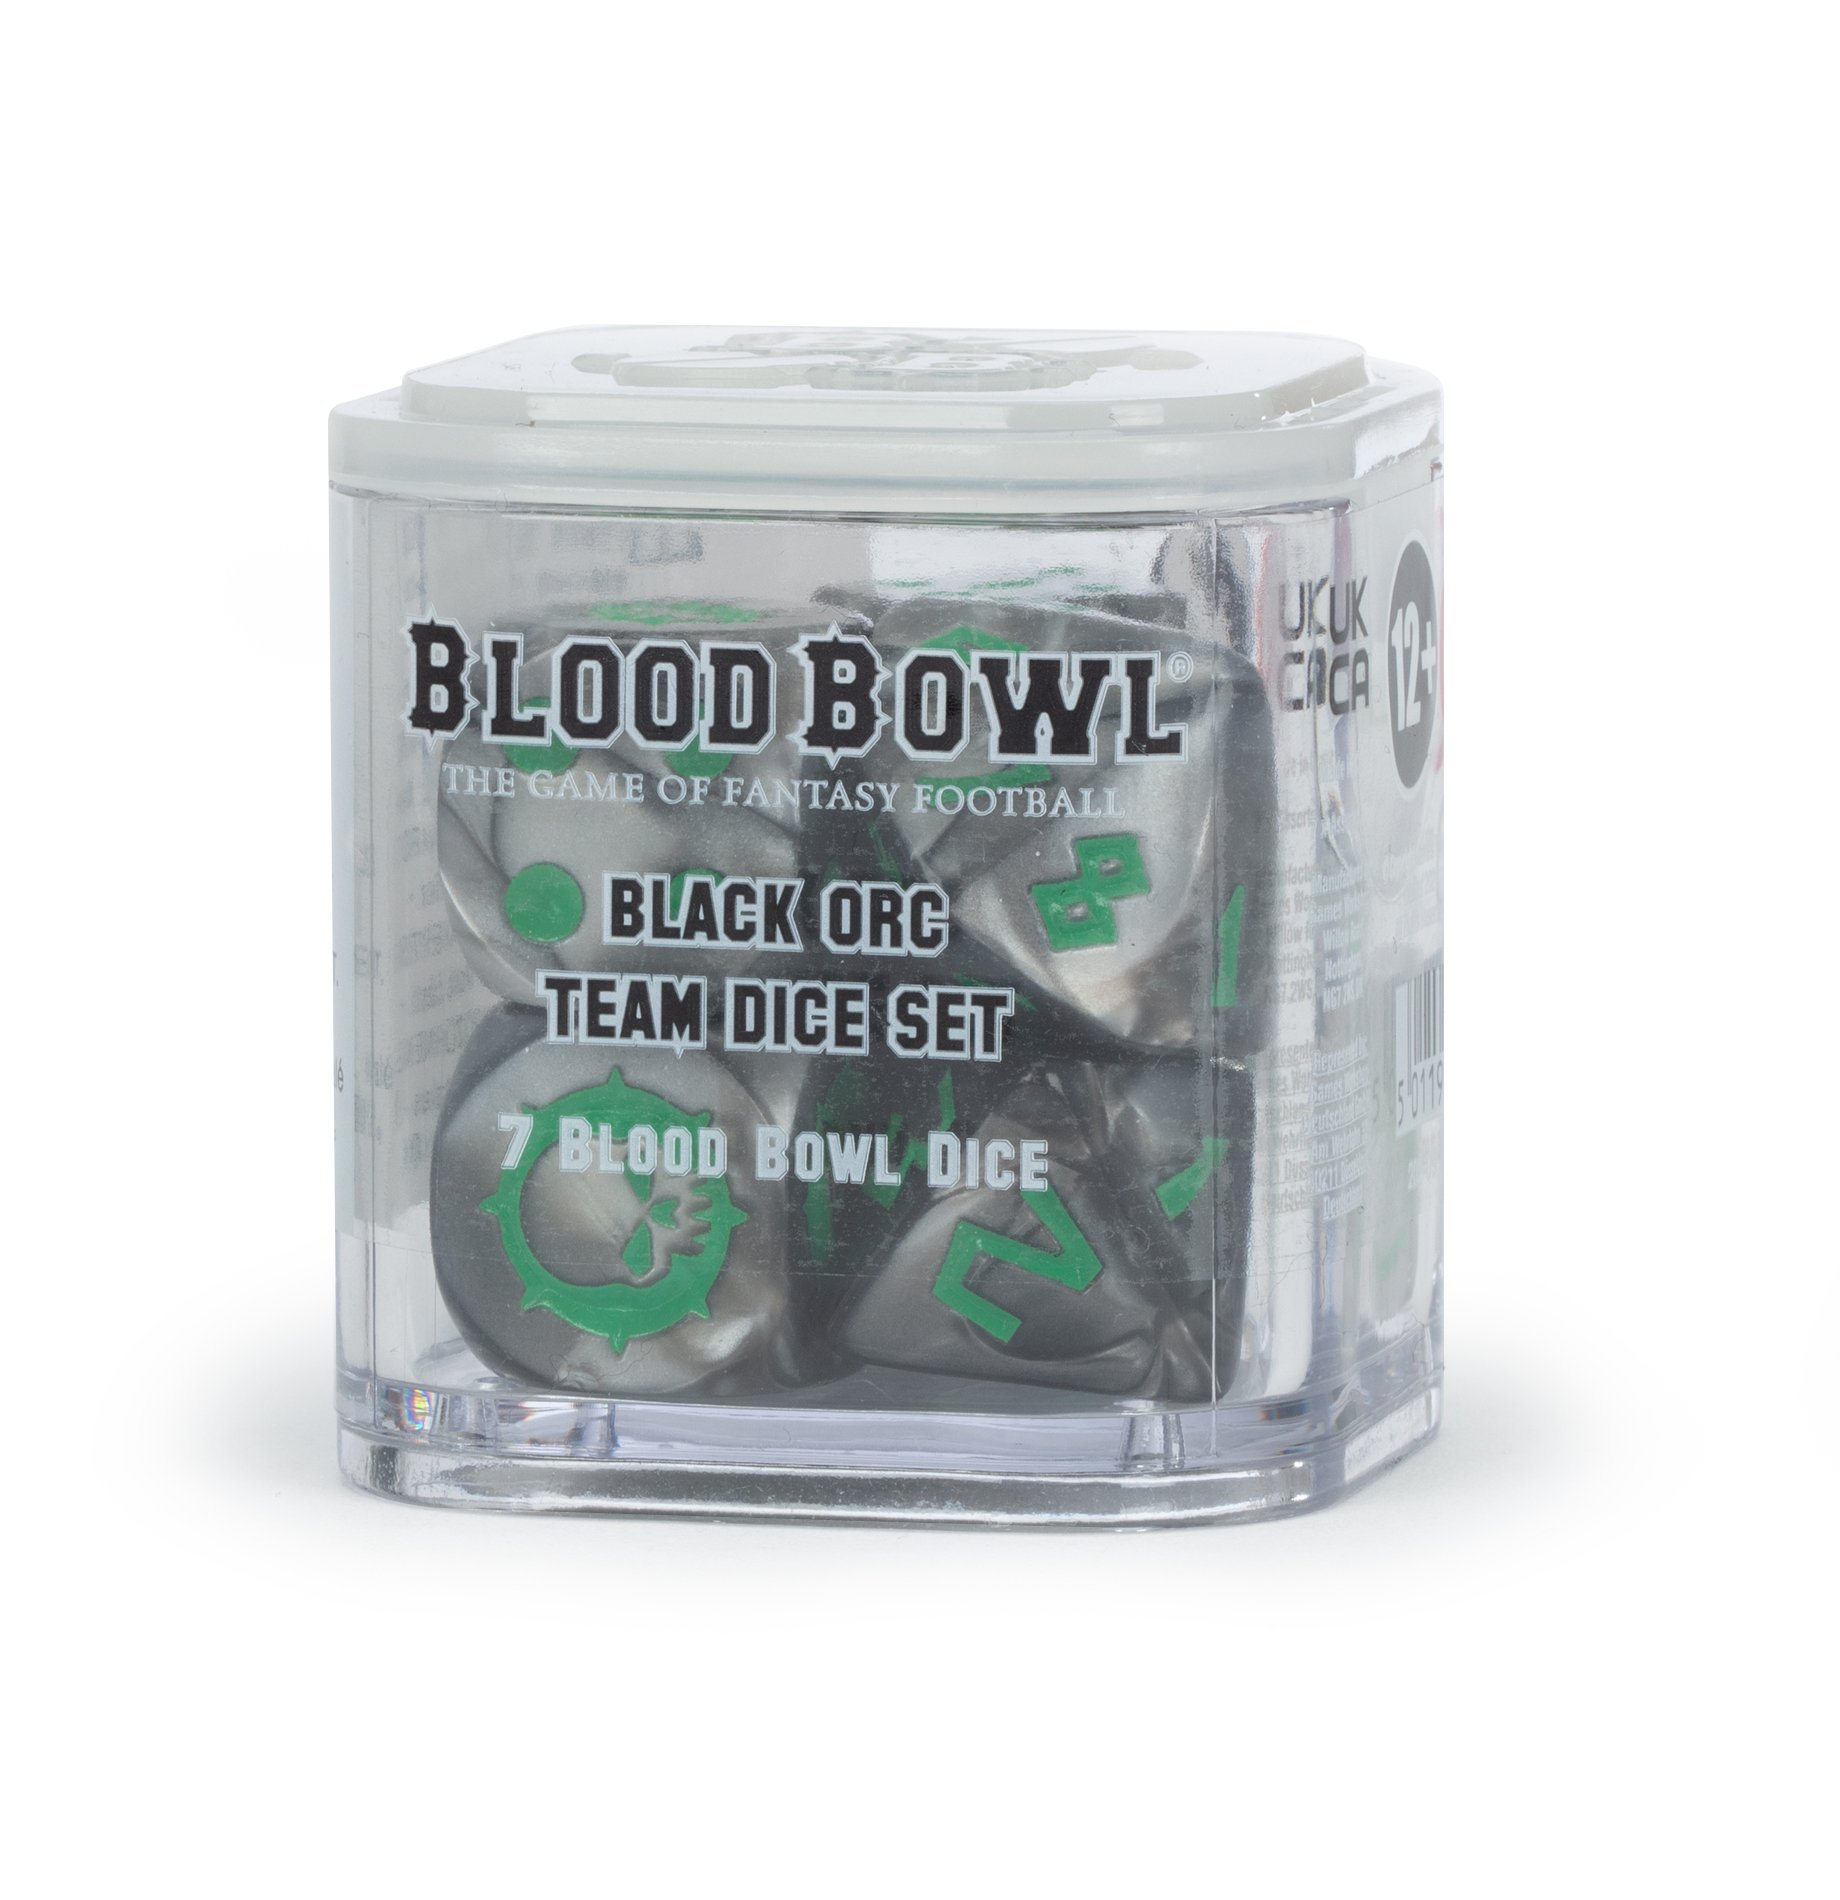 download blood bowl black orc team card pack